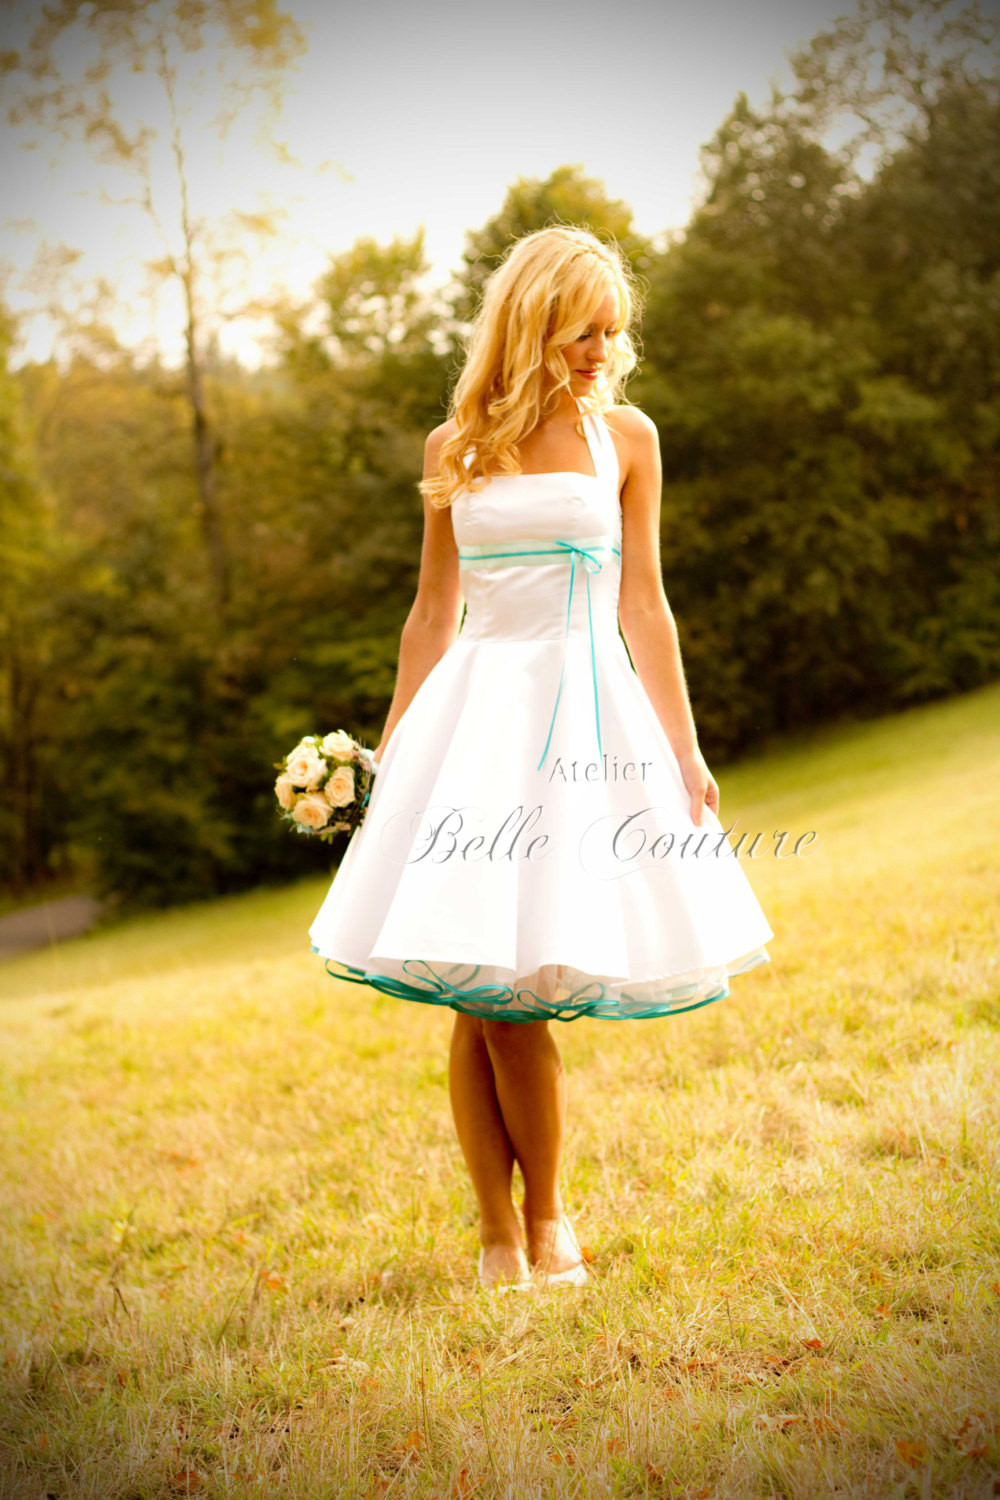 Wedding Dress Petticoat
 Petticoat Wedding Dress Item Véro By Atelierbellecouture